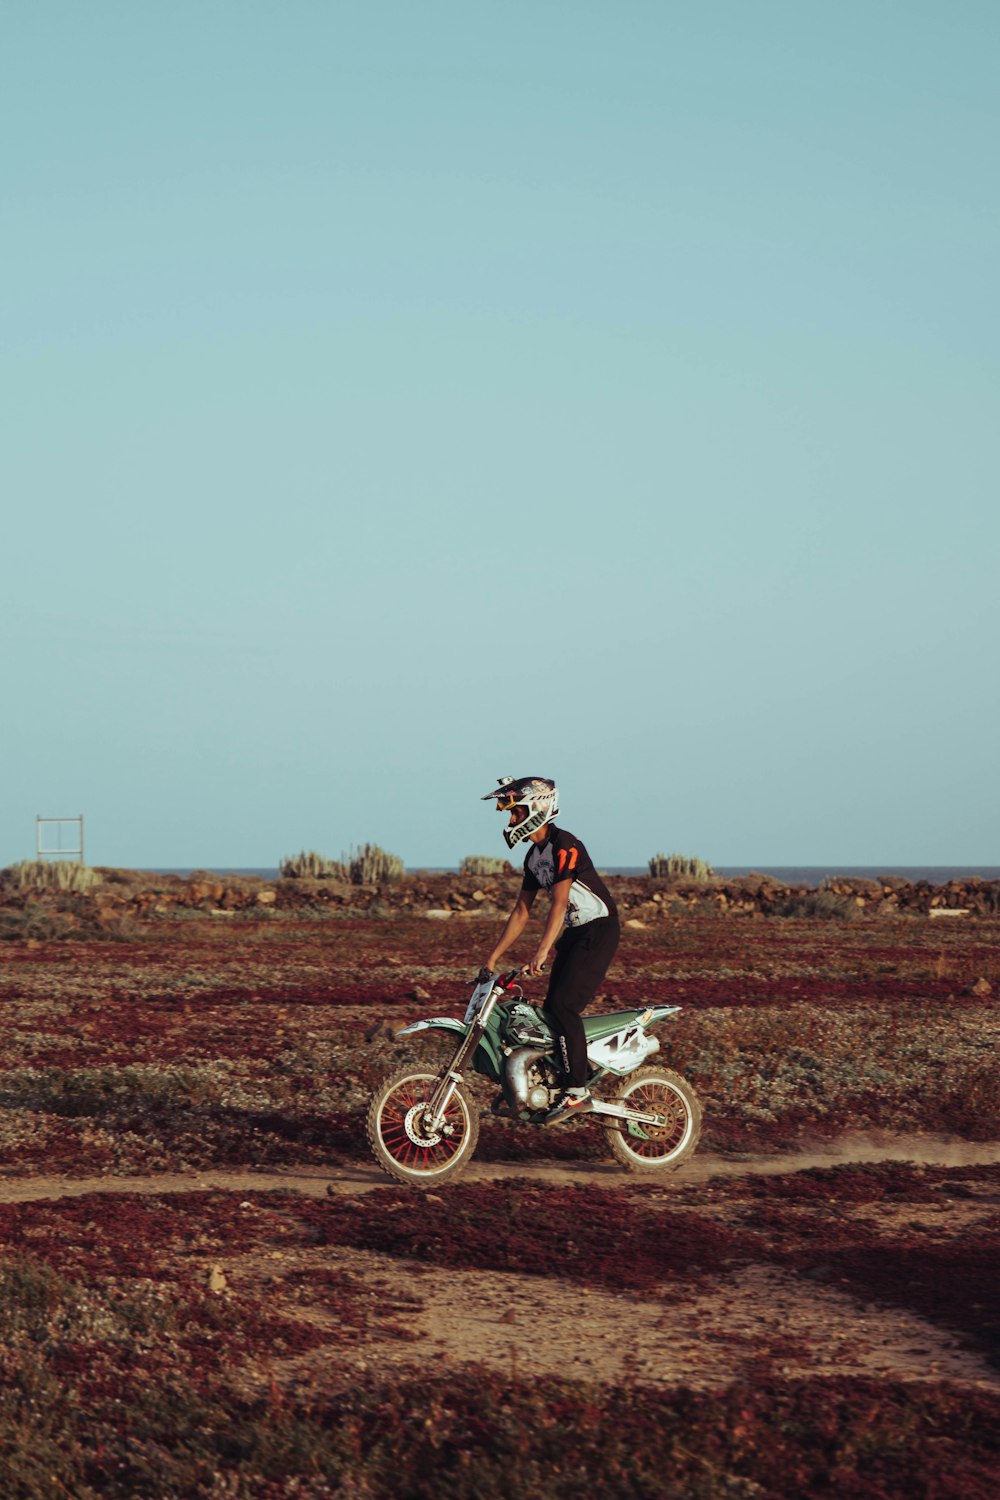 a man riding a dirt bike on a dirt road